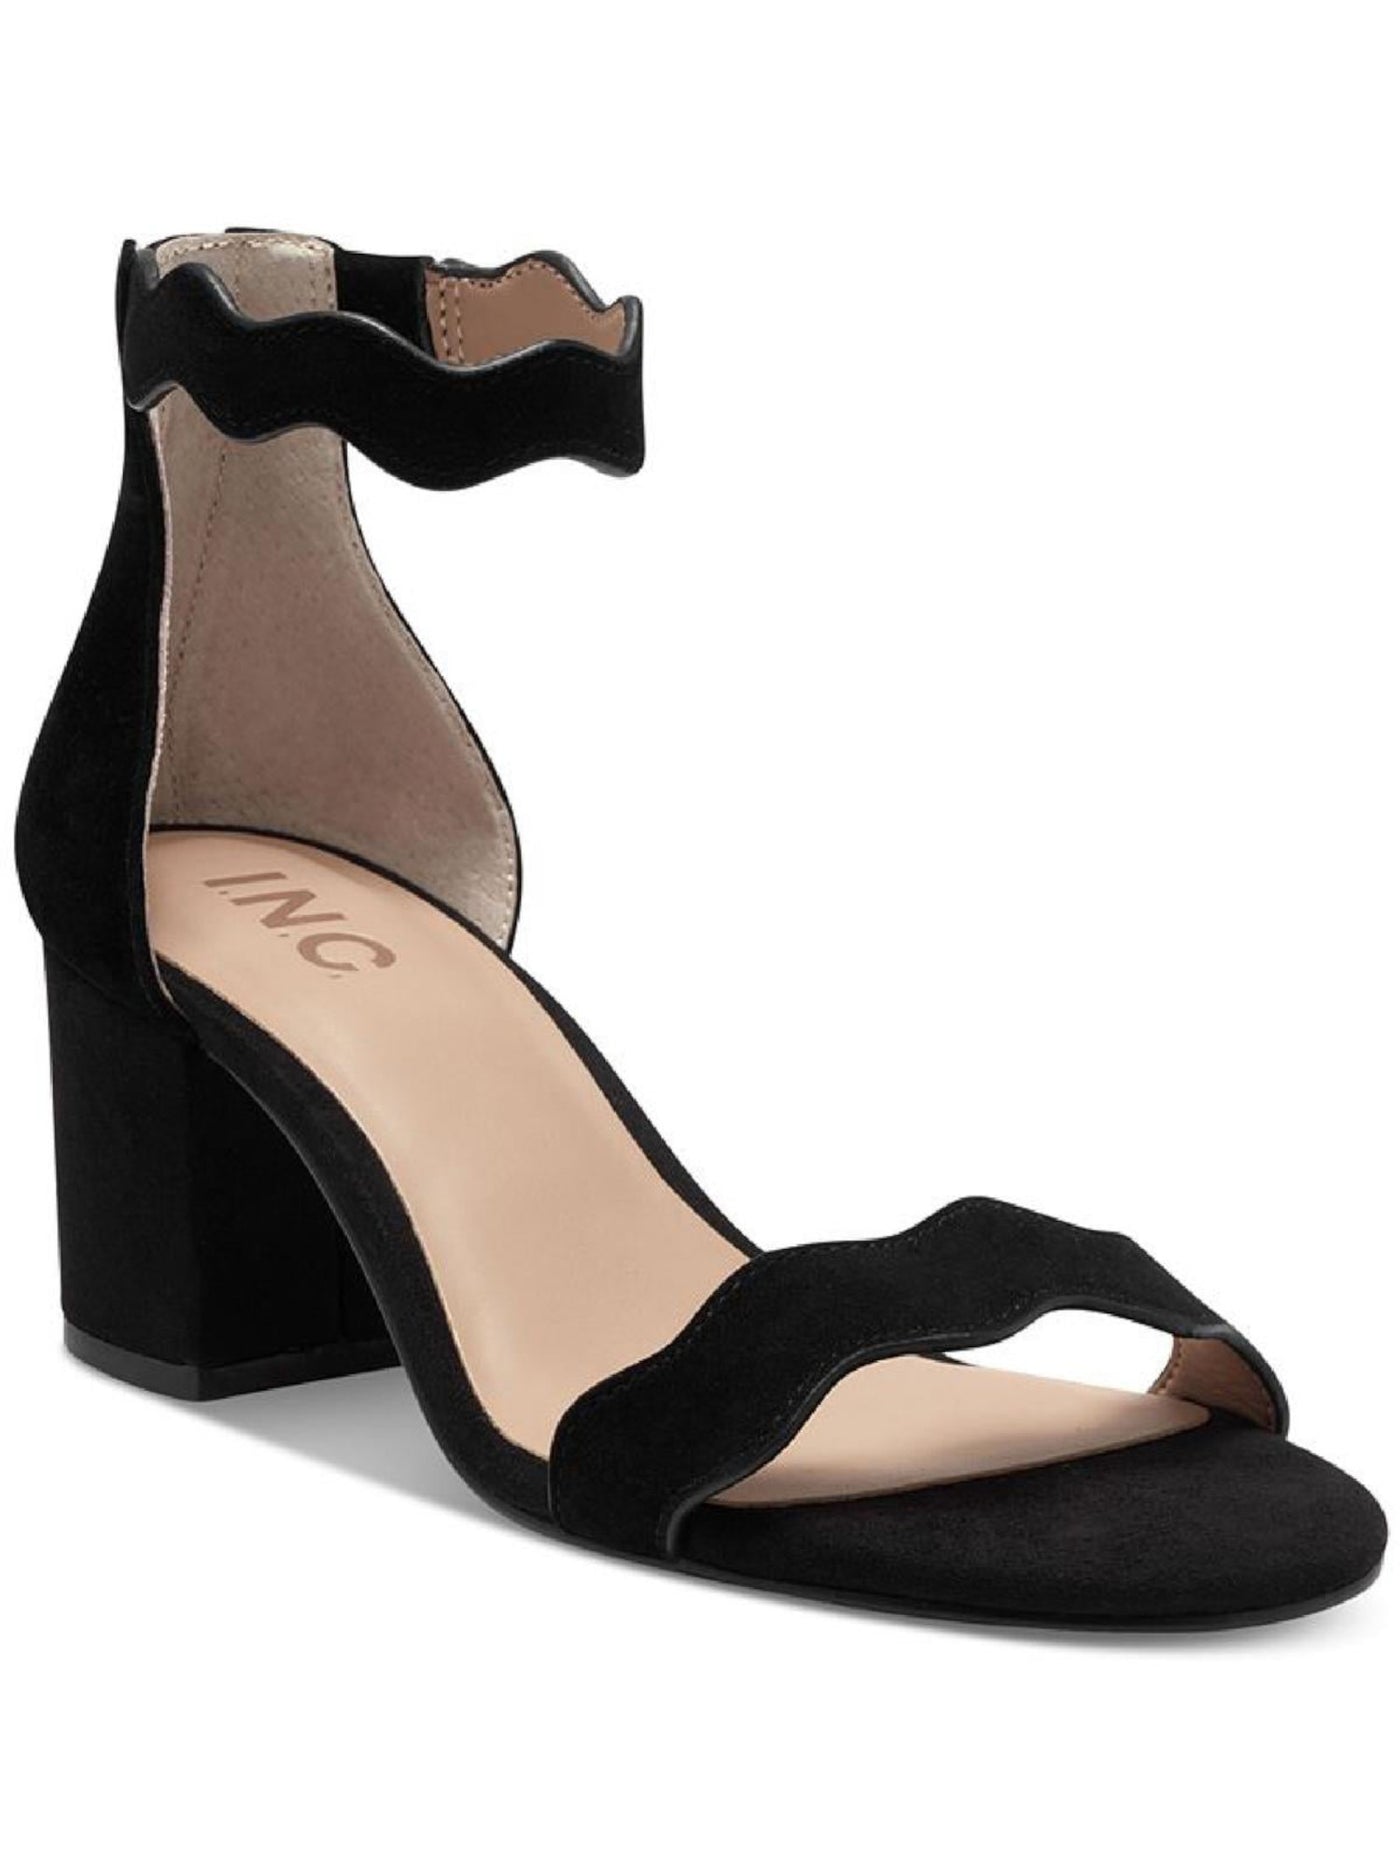 INC Womens Black Rhinestone Ankle Strap Scalloped Kadwin Round Toe Block Heel Zip-Up Leather Dress Sandals Shoes 9.5 M